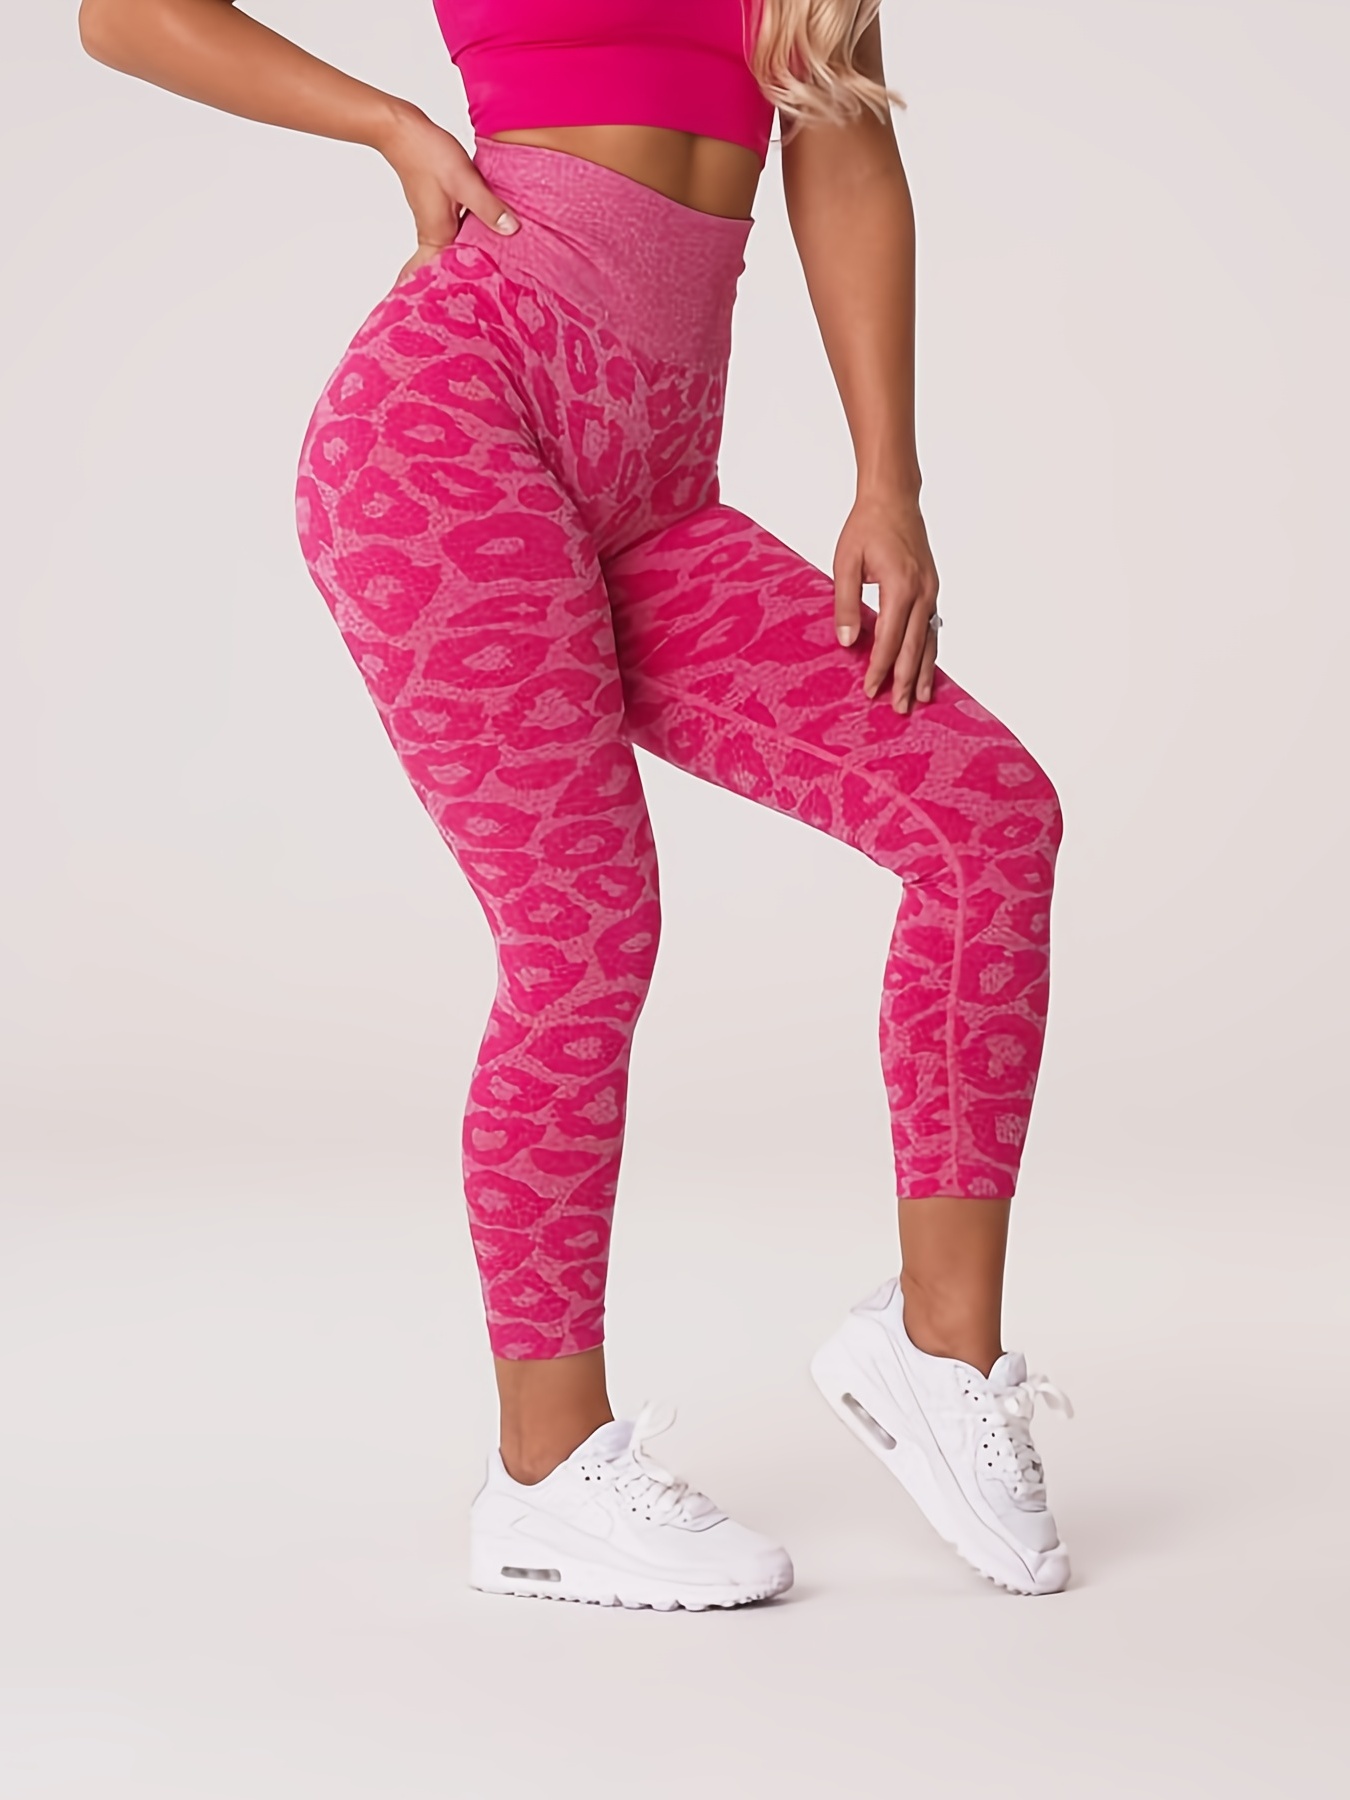 Leopard print pink Women's gym Leggings by Getmybodyfit